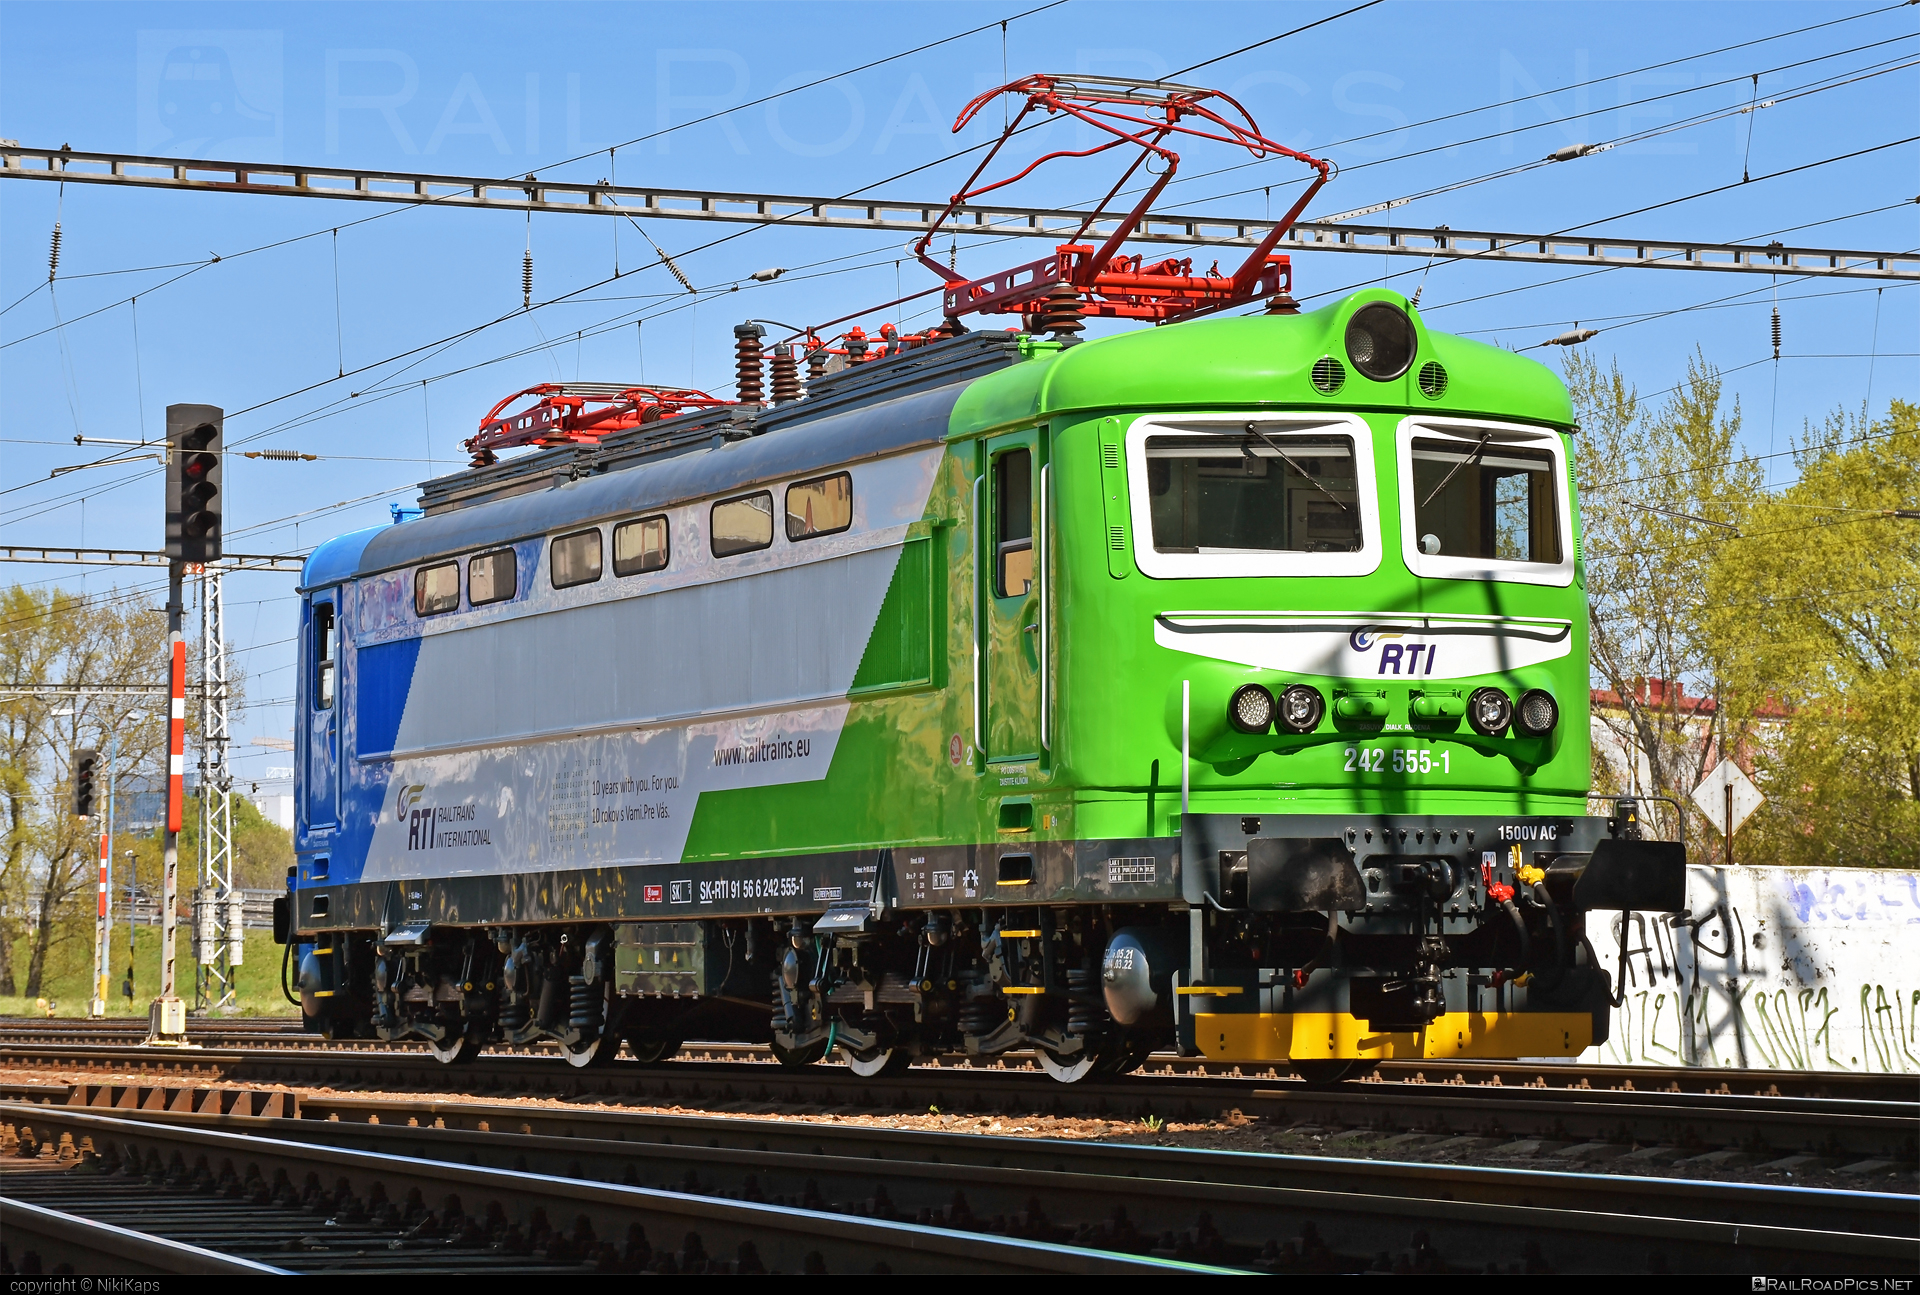 Škoda 64E - 242 555-1 operated by Railtrans International, s.r.o #BDZclass43 #RailtransInternational #plechac #rti #skoda #skoda64e